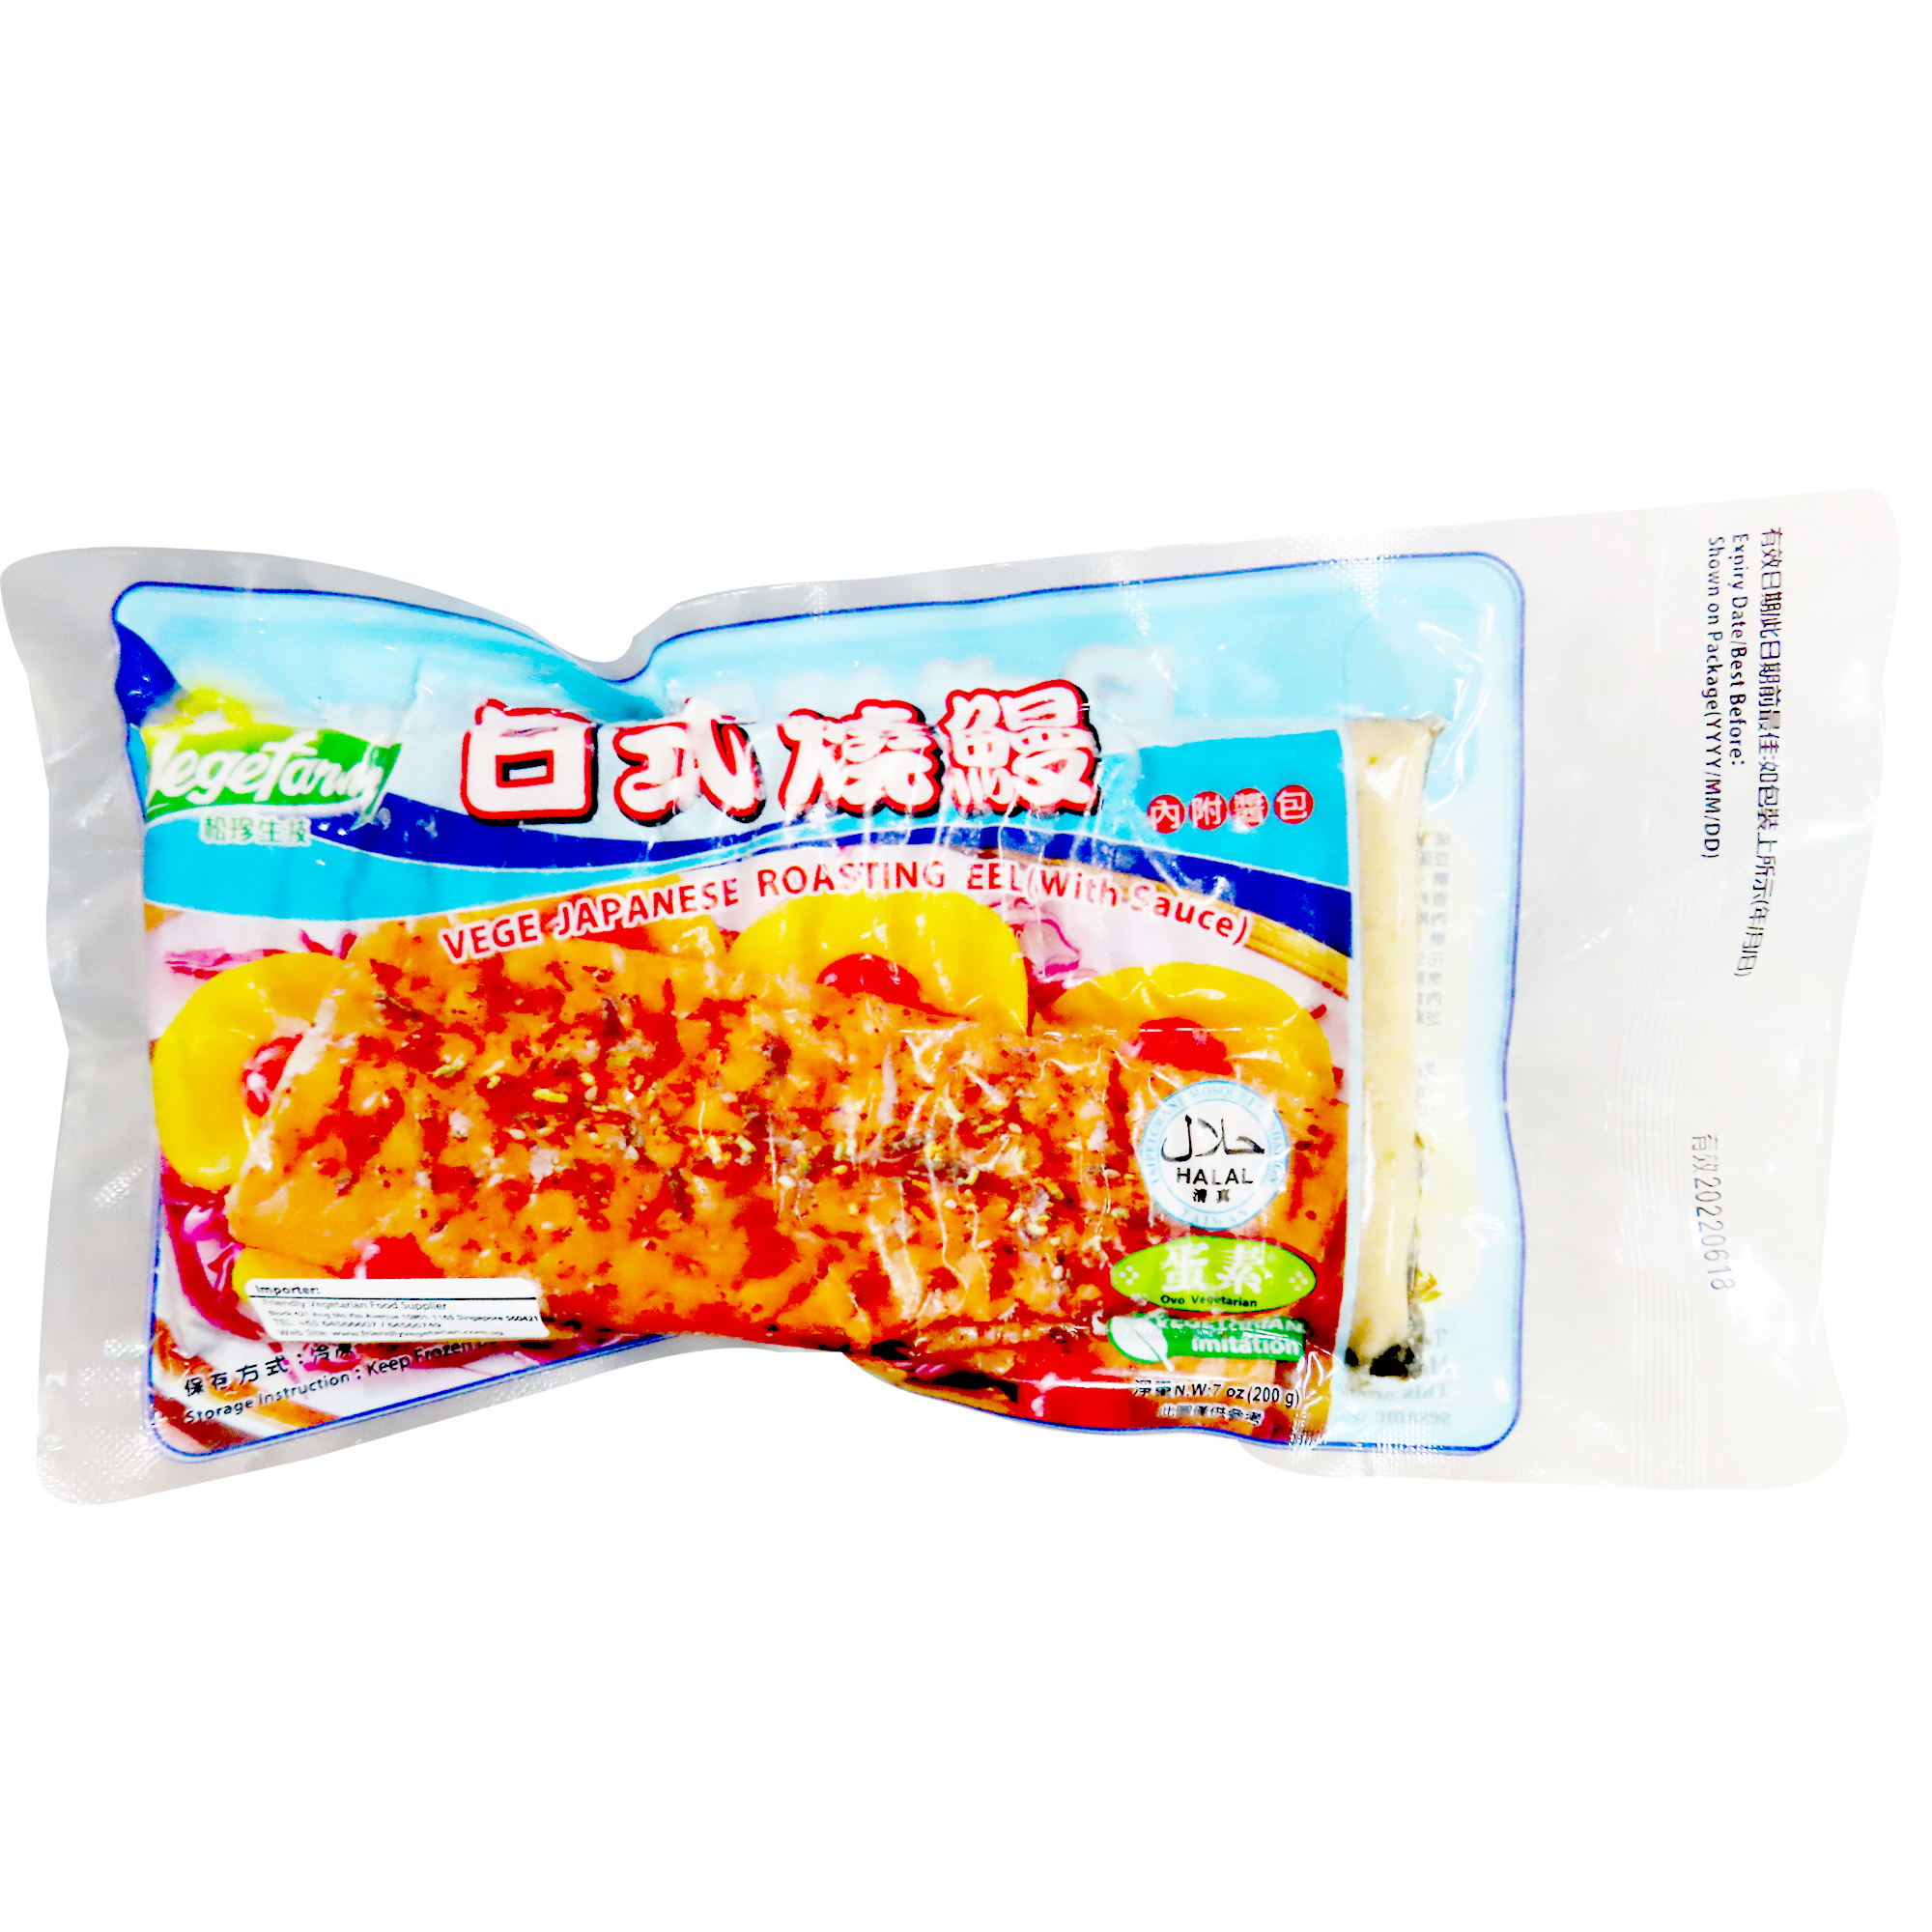 Image Vege Japanese Roasted Eel (with sauce) 松珍-曰式素烧鳗 (加酱） 200grams